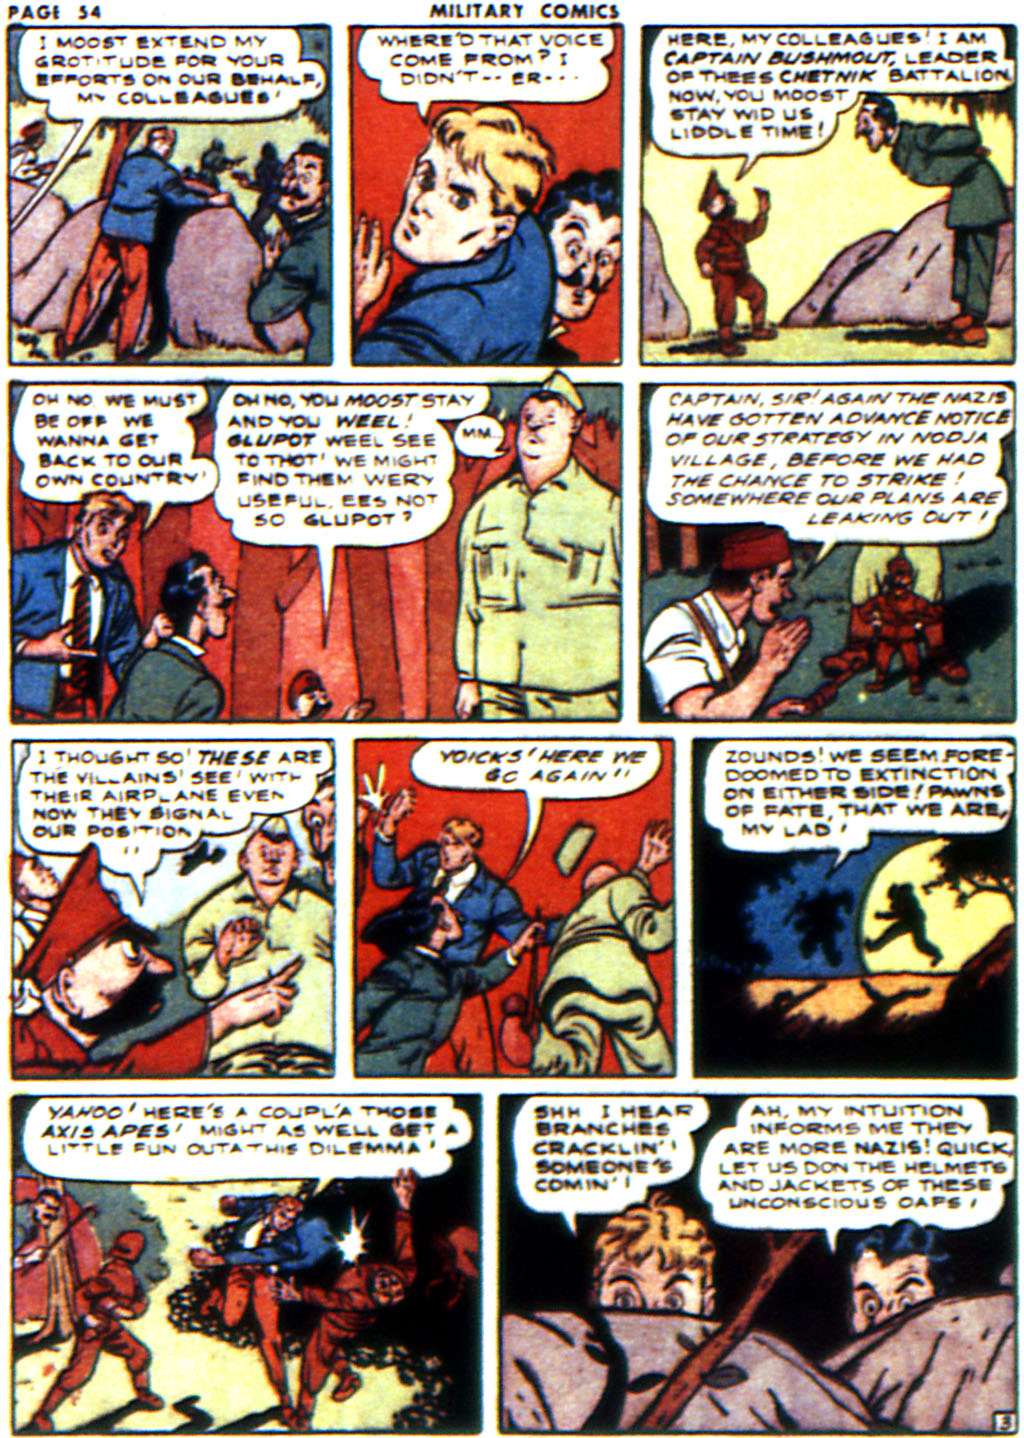 Read online Military Comics comic -  Issue #14 - 56